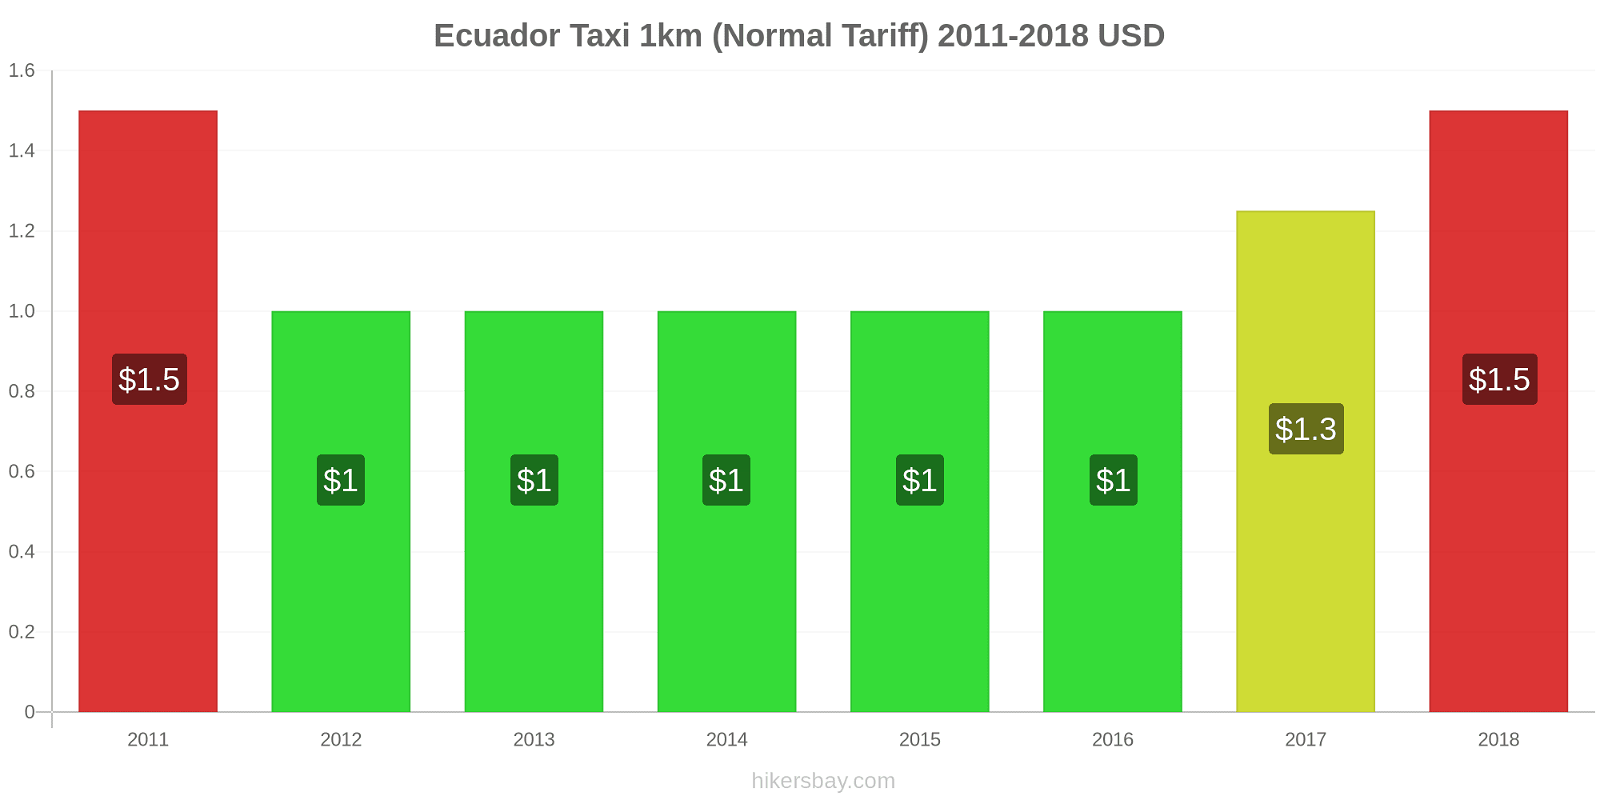 Ecuador price changes Taxi 1km (Normal Tariff) hikersbay.com